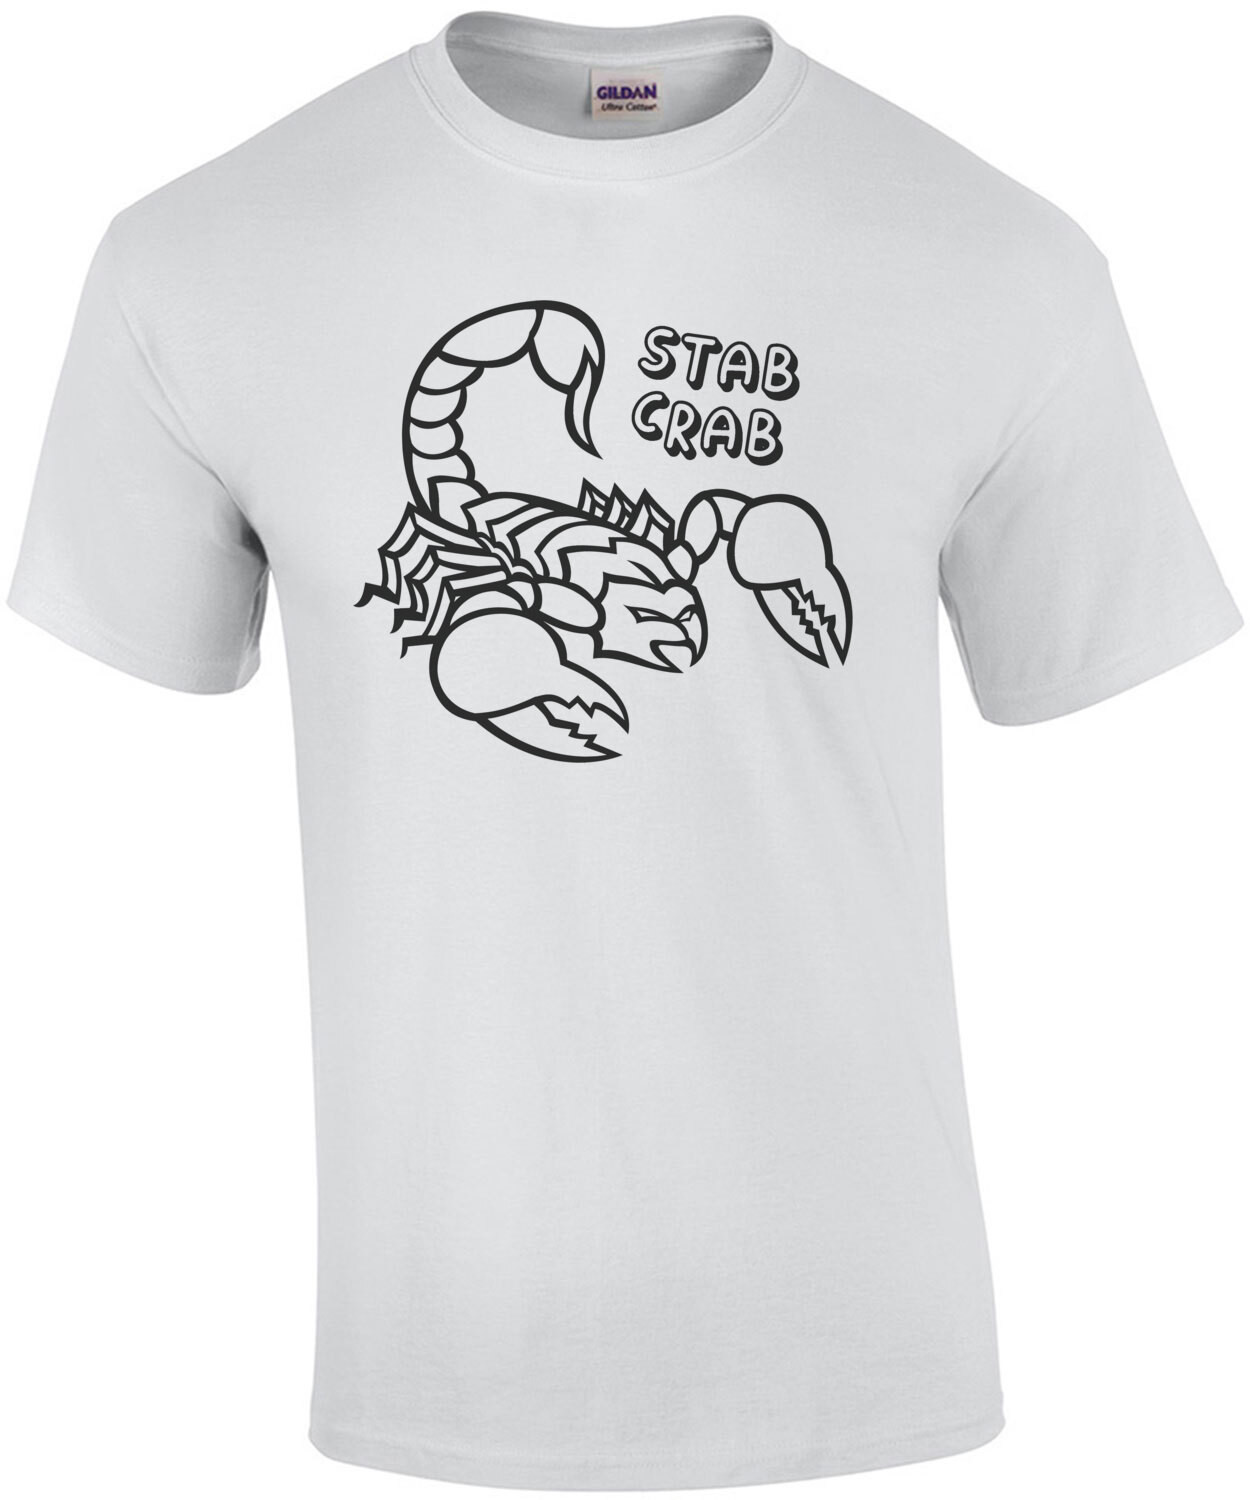 Stab Crab Scorpion T-Shirt